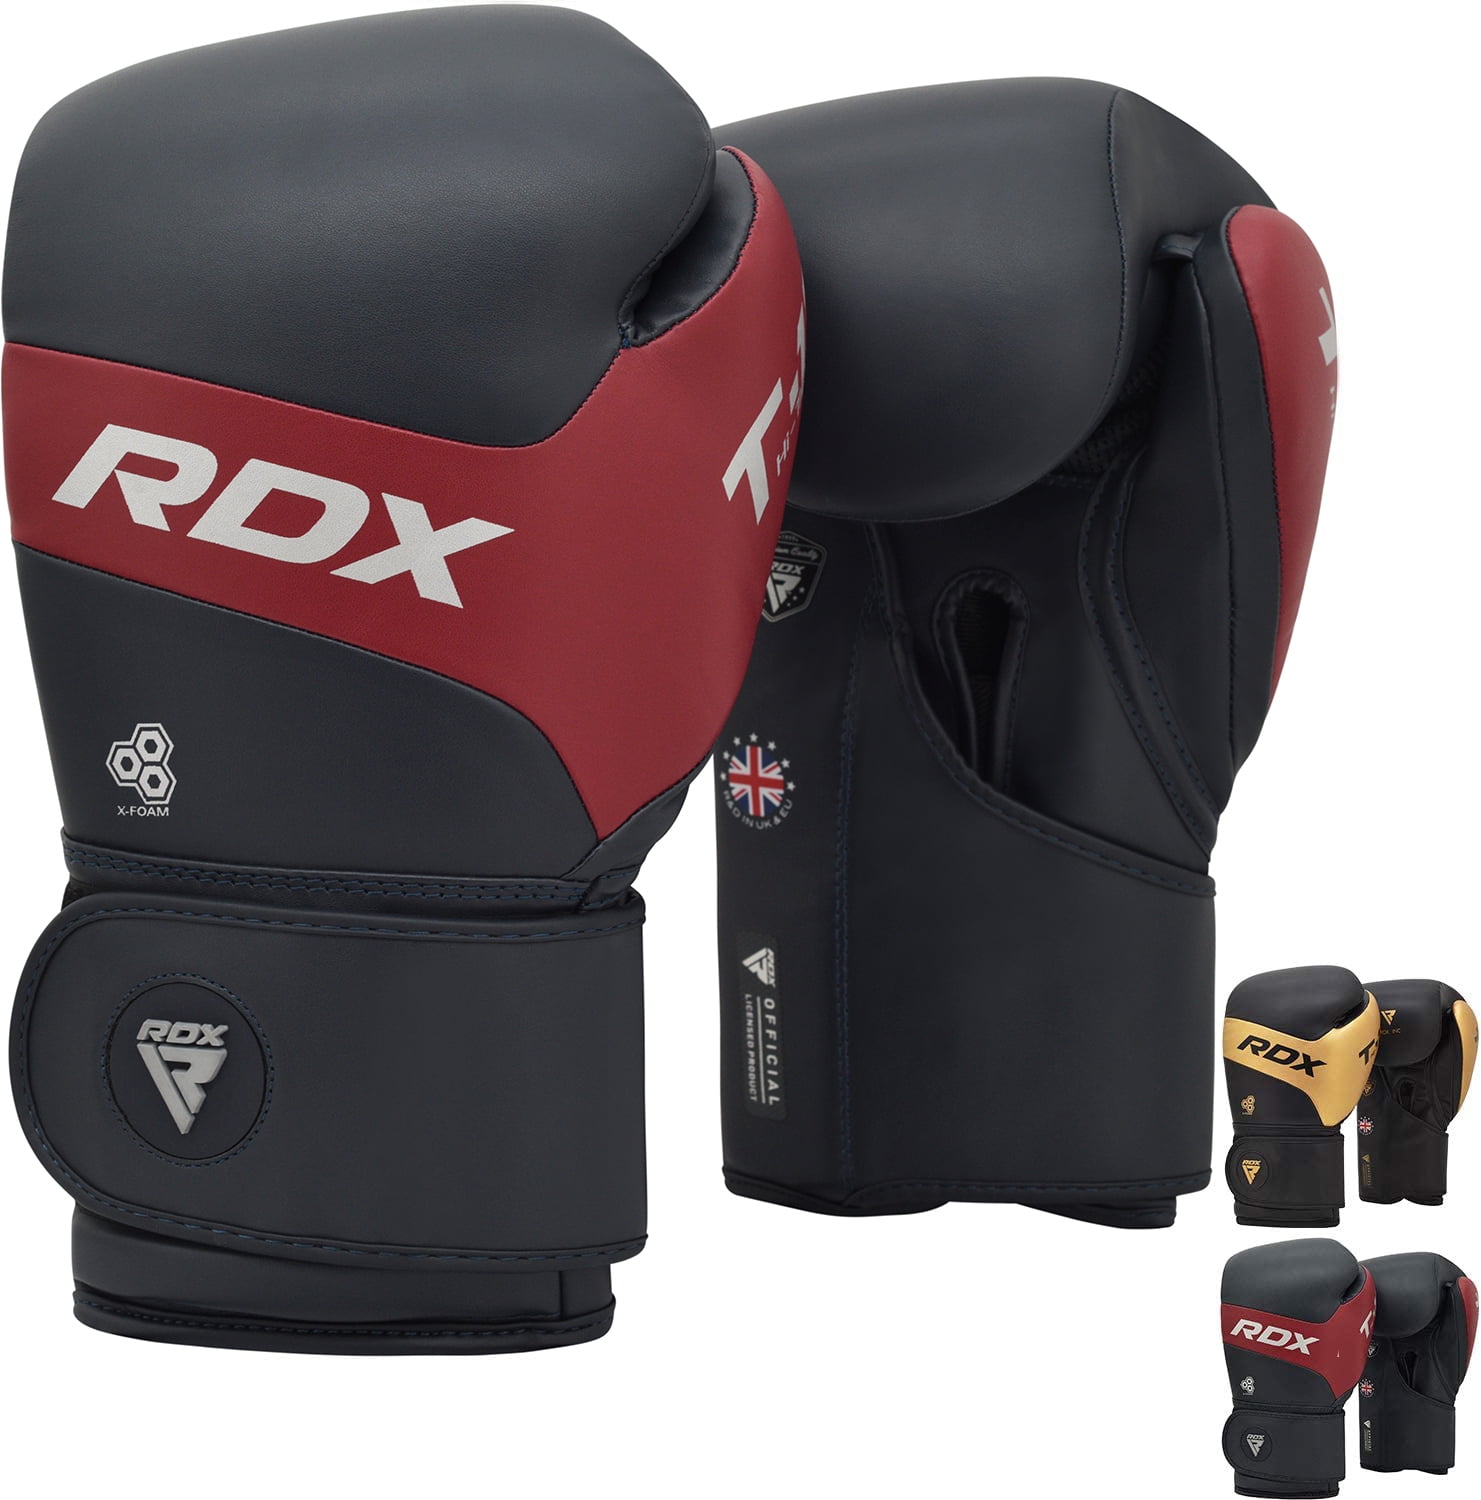 6oz Leather Boxing Gloves Training Fitness Exercise Punching Palm Focus Pad Set 